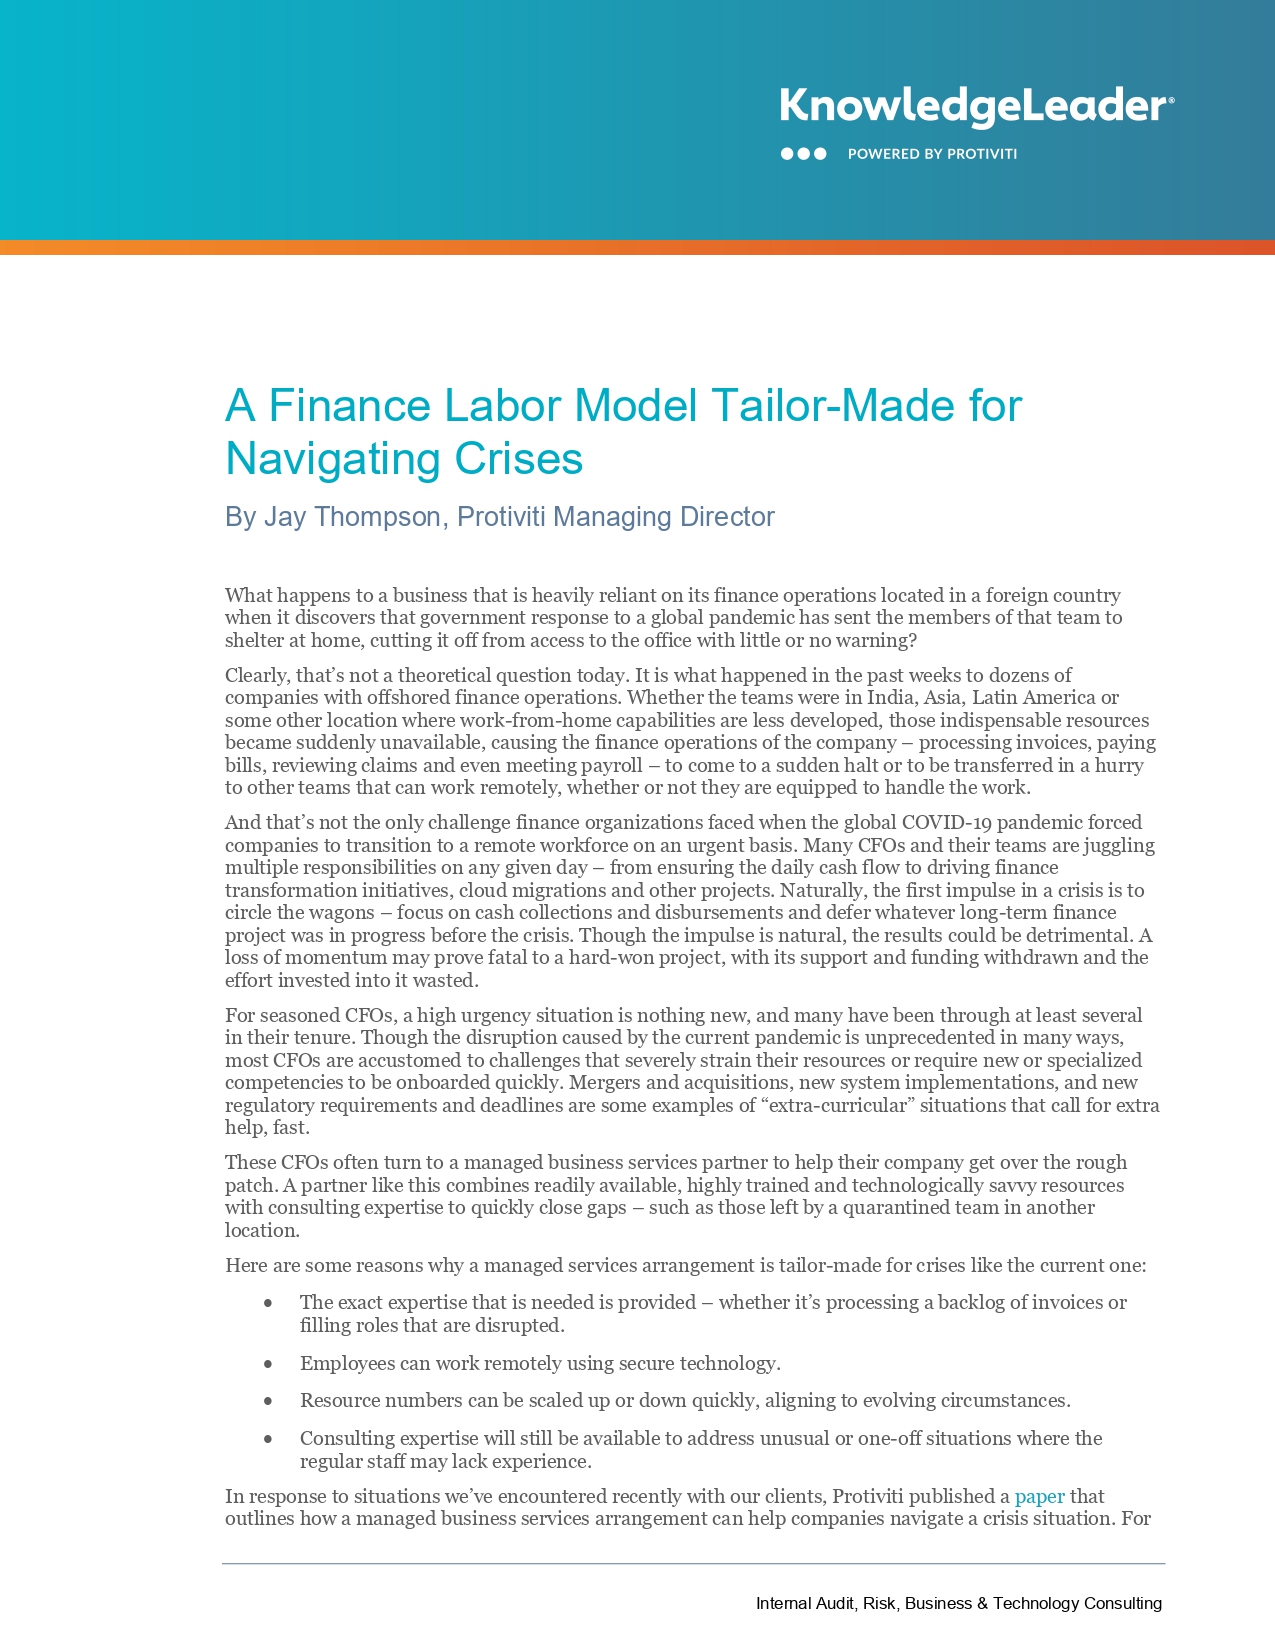 A Finance Labor Model Tailor-Made for Navigating Crises